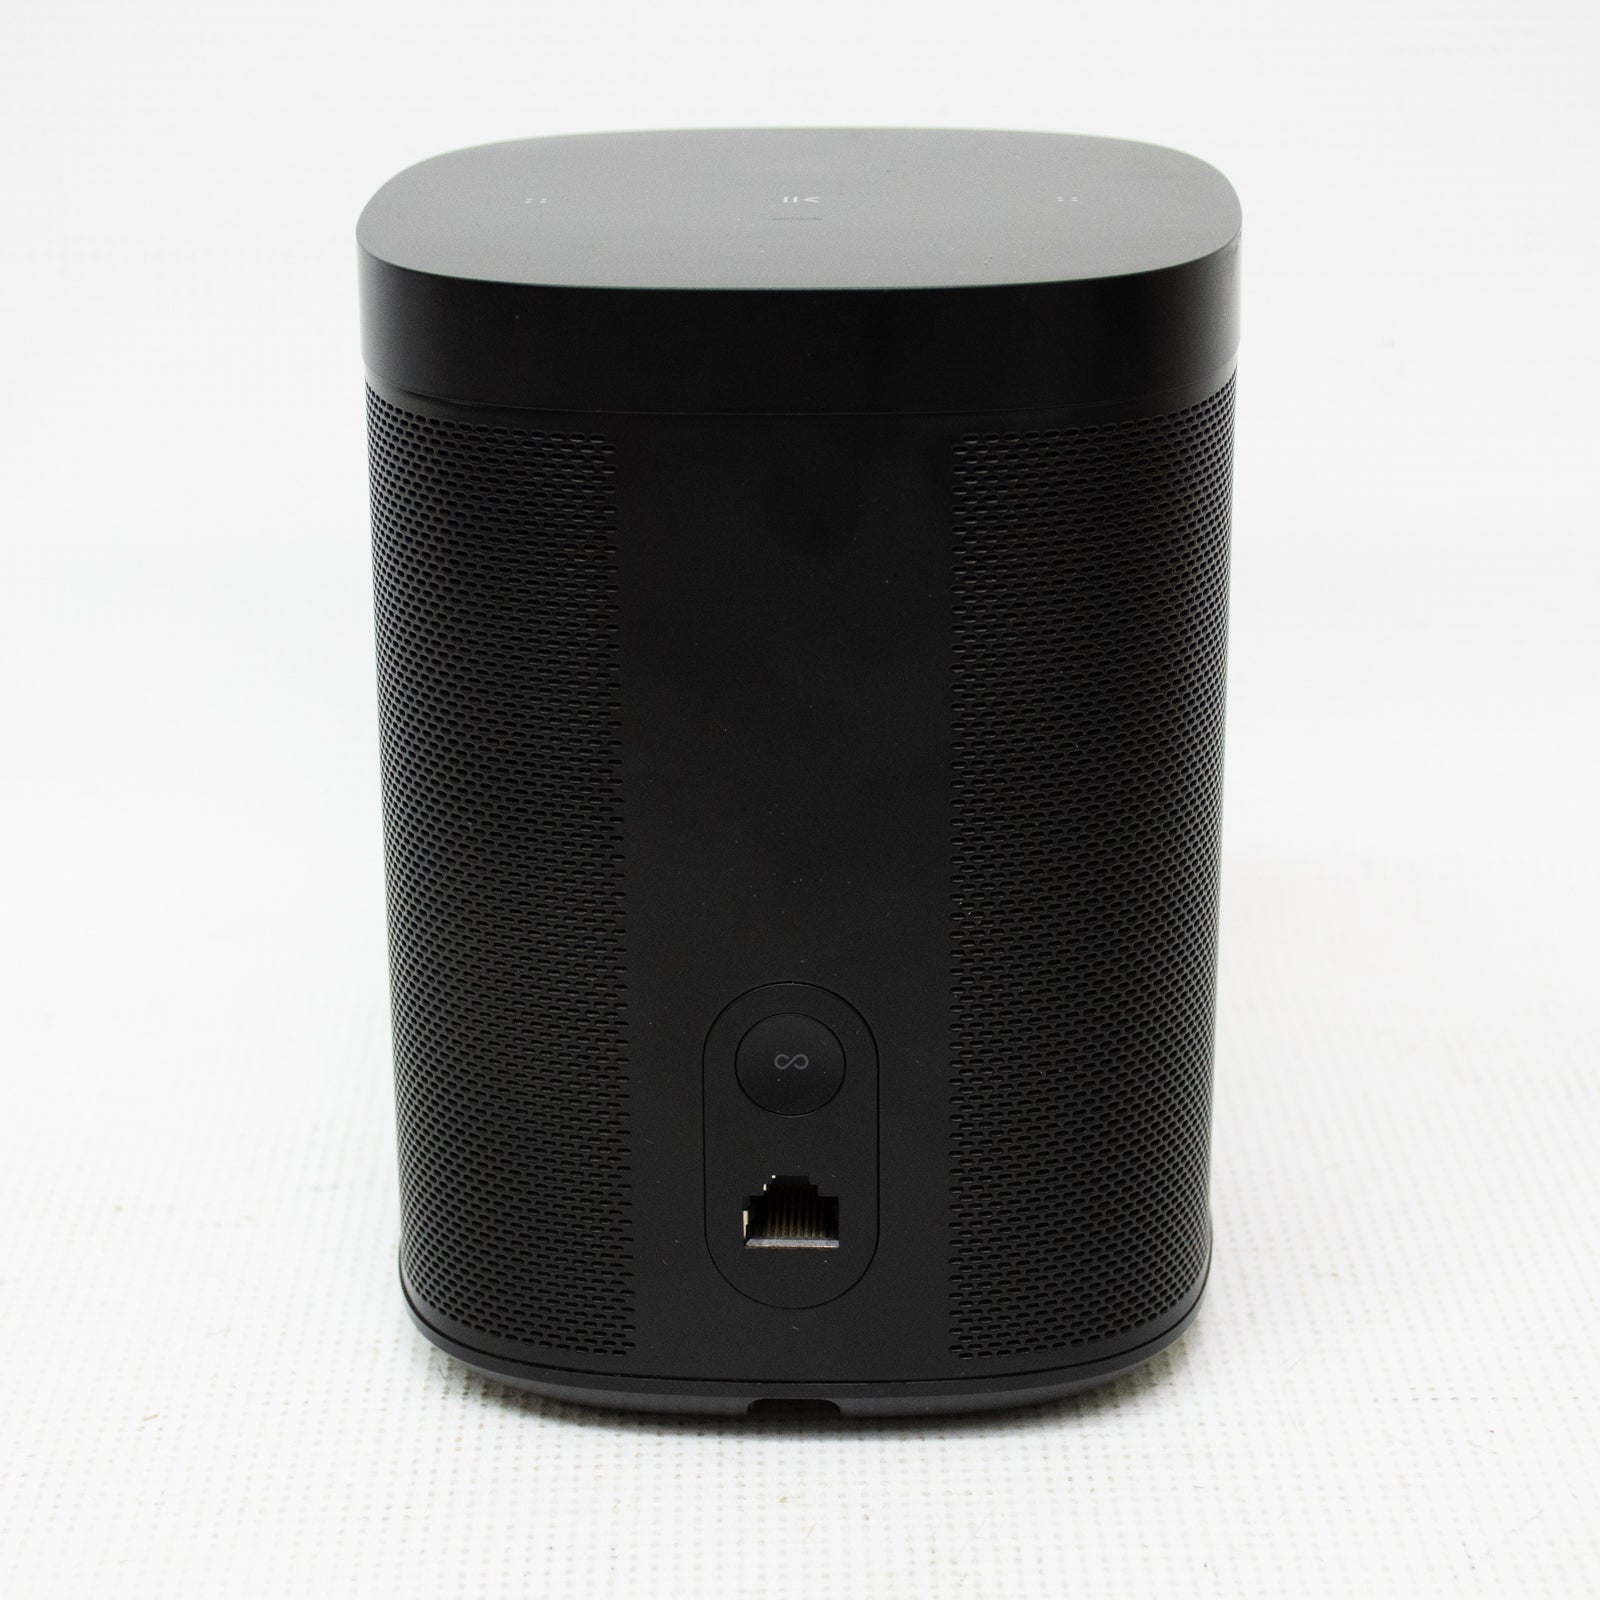 Sonos One SL Wireless Smart Speaker - Black